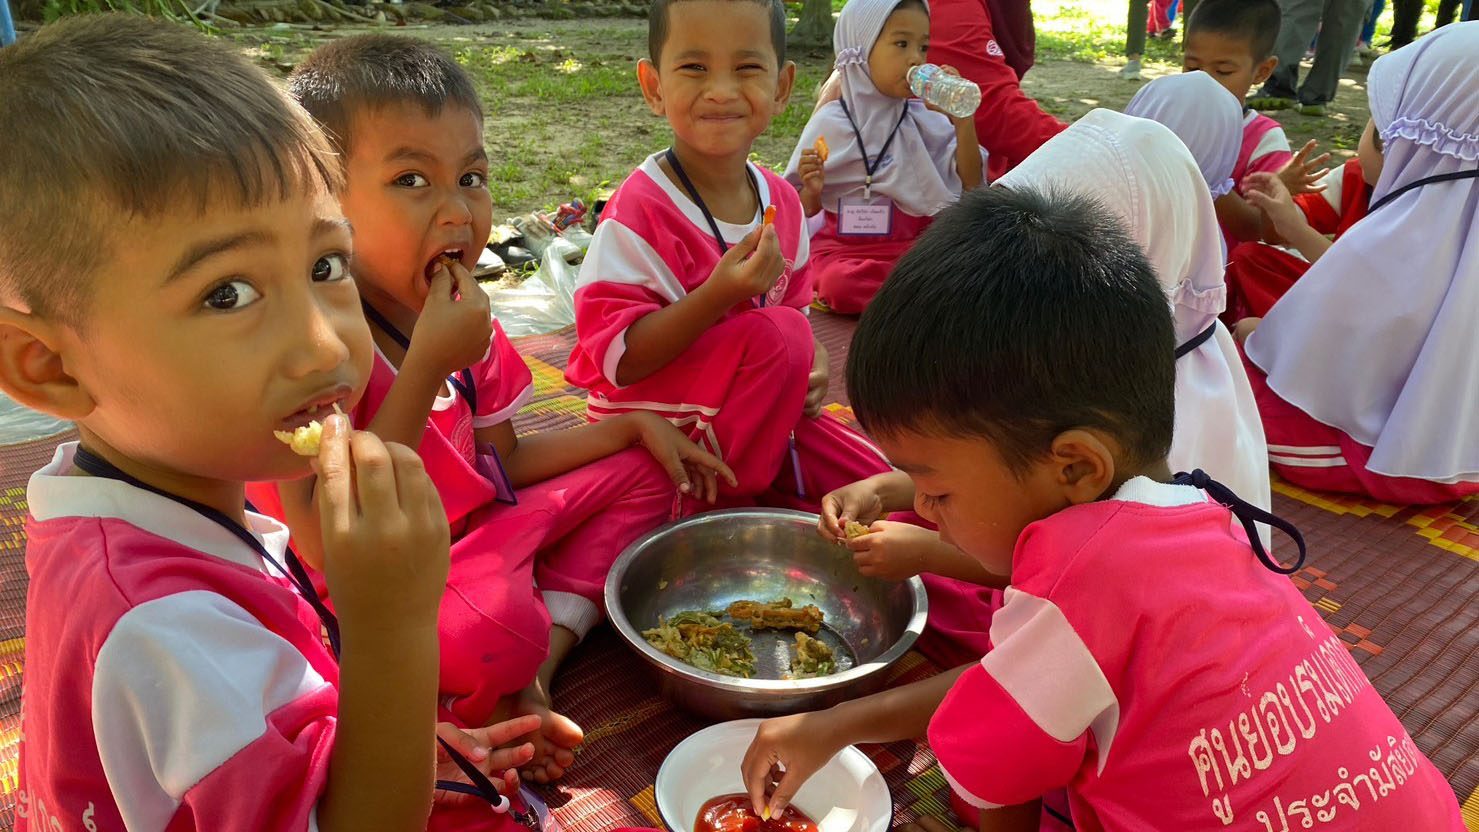 Group of little boys gathers eating tempura vegetables